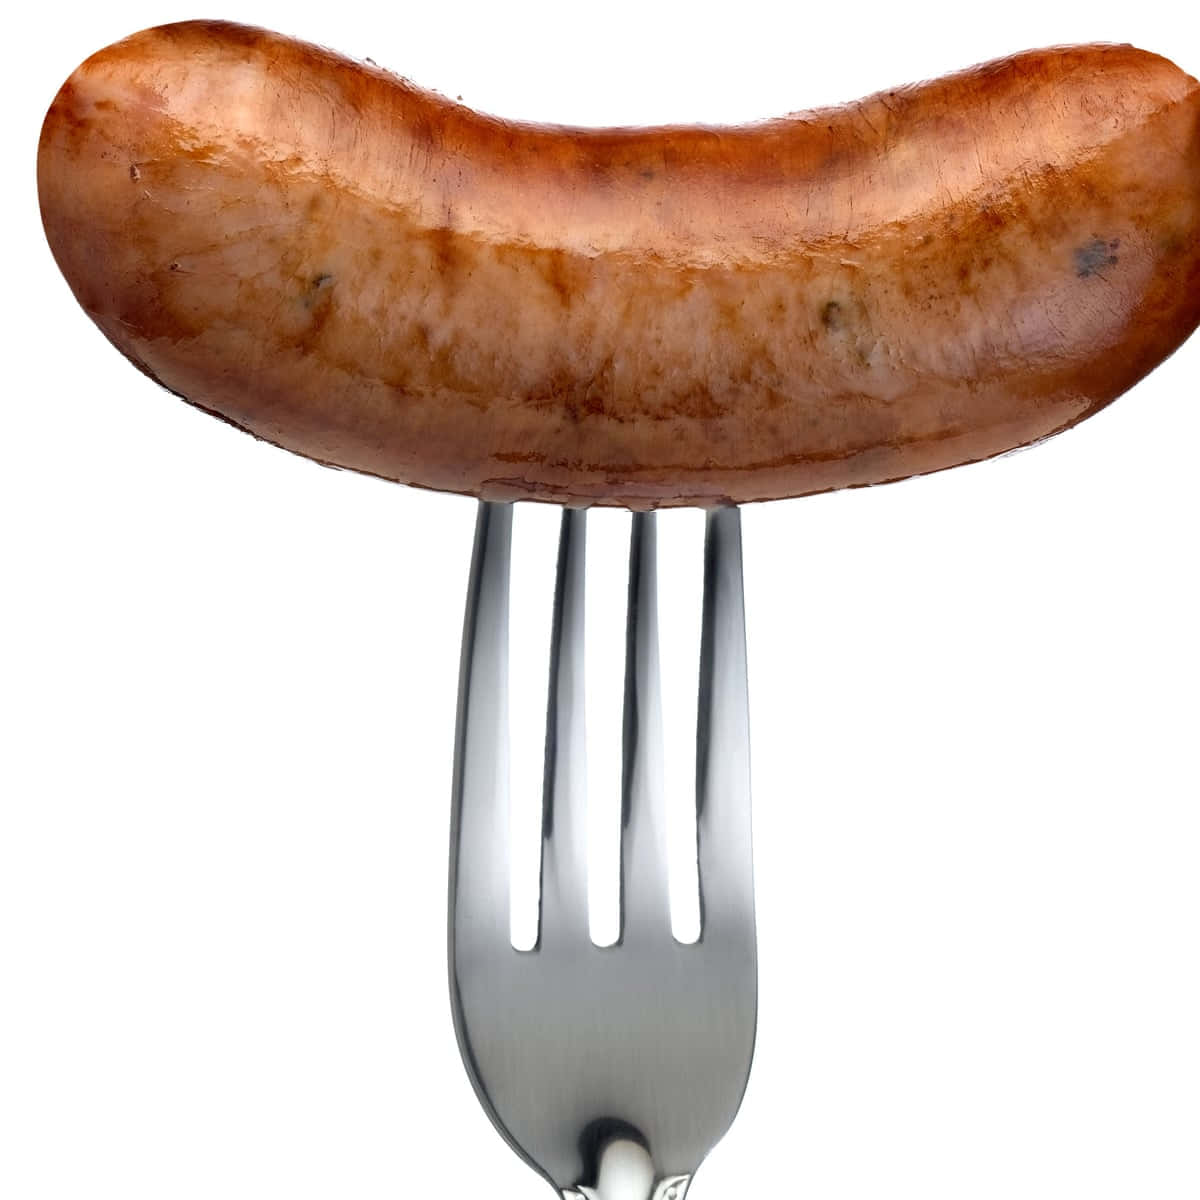 Sausage On A Fork